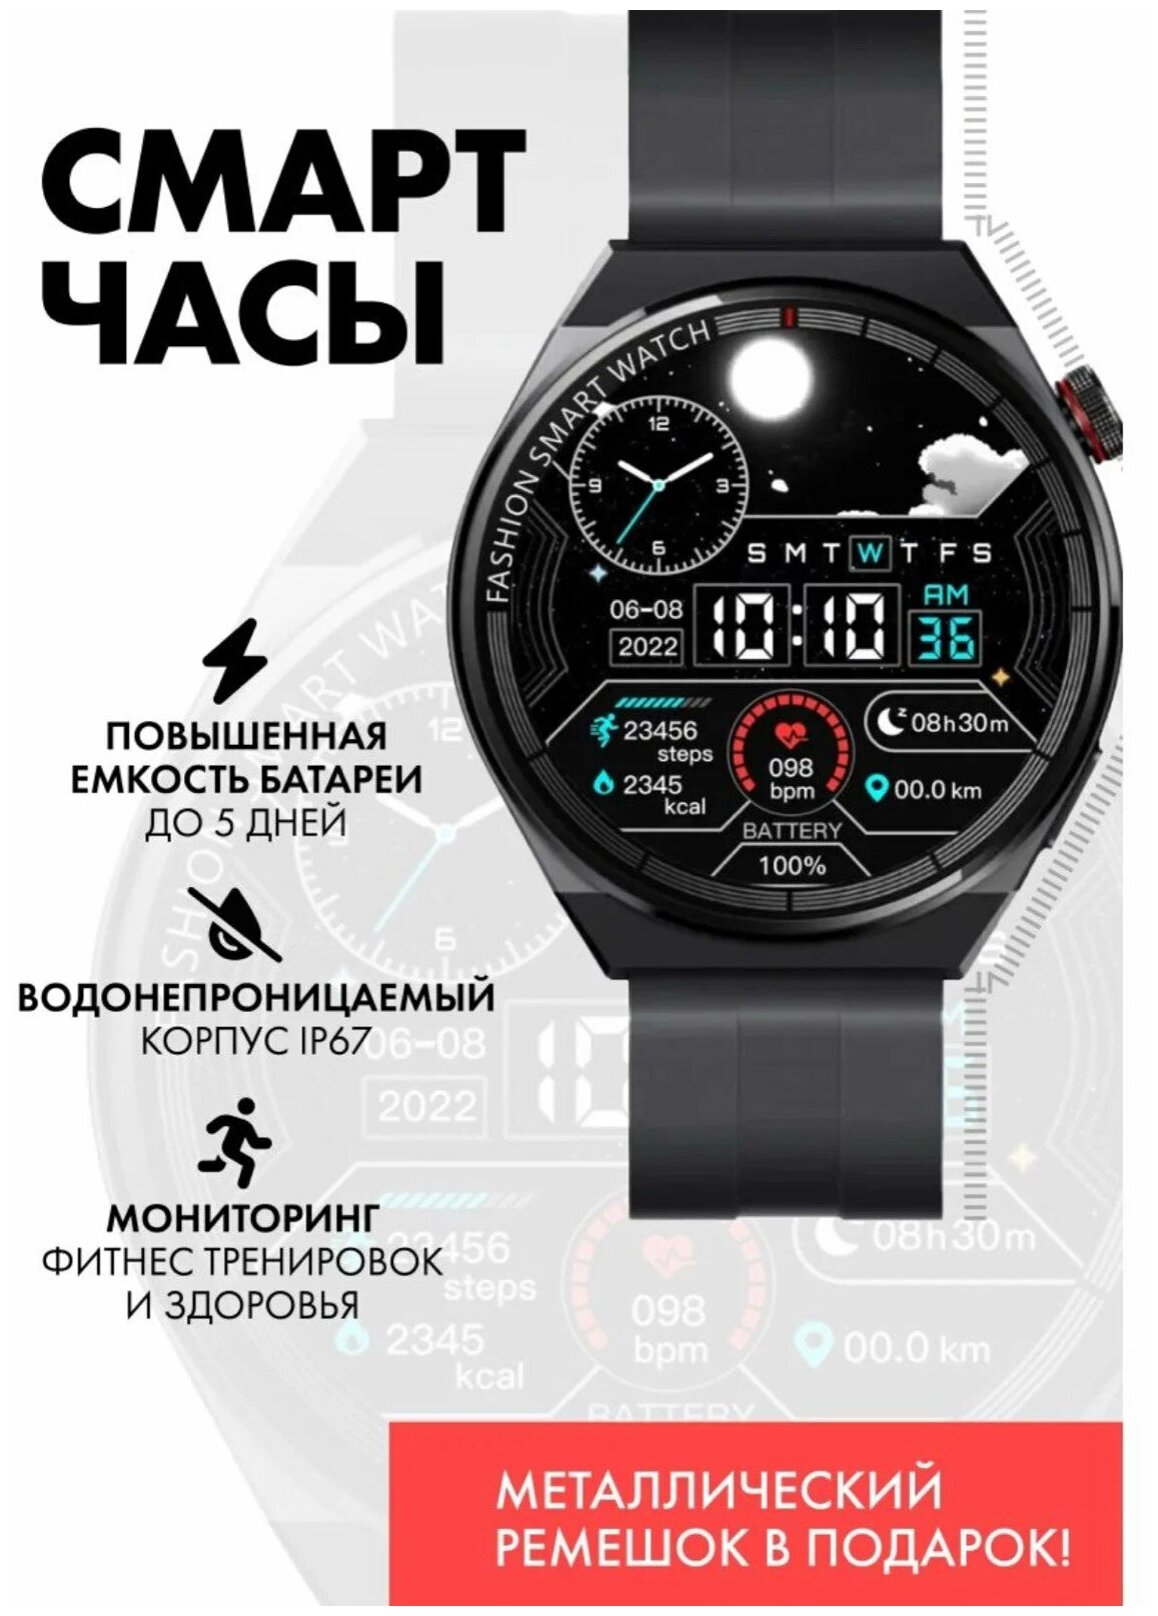 NEW 2022 август Smart X GT3 Max One Smart Watch 1.39 Экран AMOLED HD / Умный помощник / Полный функционал, оплата, звонки